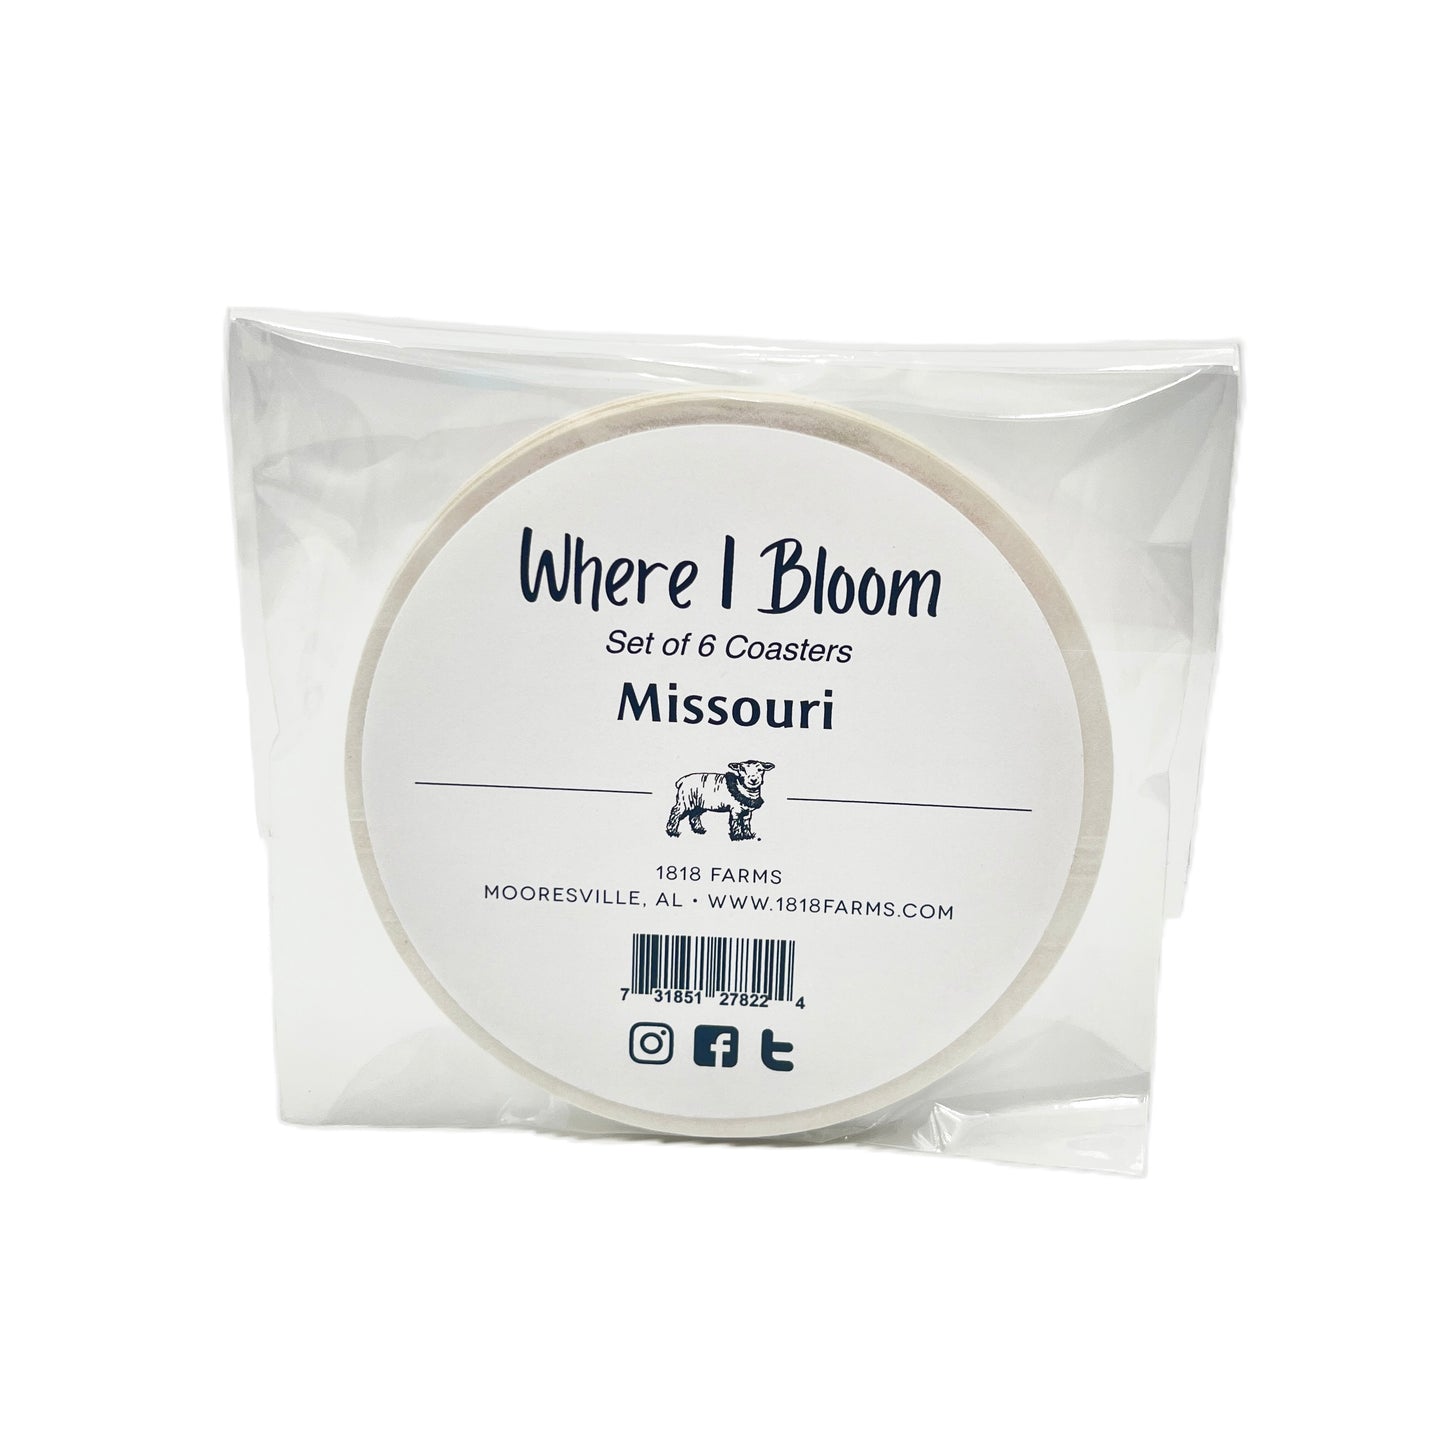 Missouri Themed Coasters (Set of 6)  - "Where I Bloom" Collection Coaster 1818 Farms   